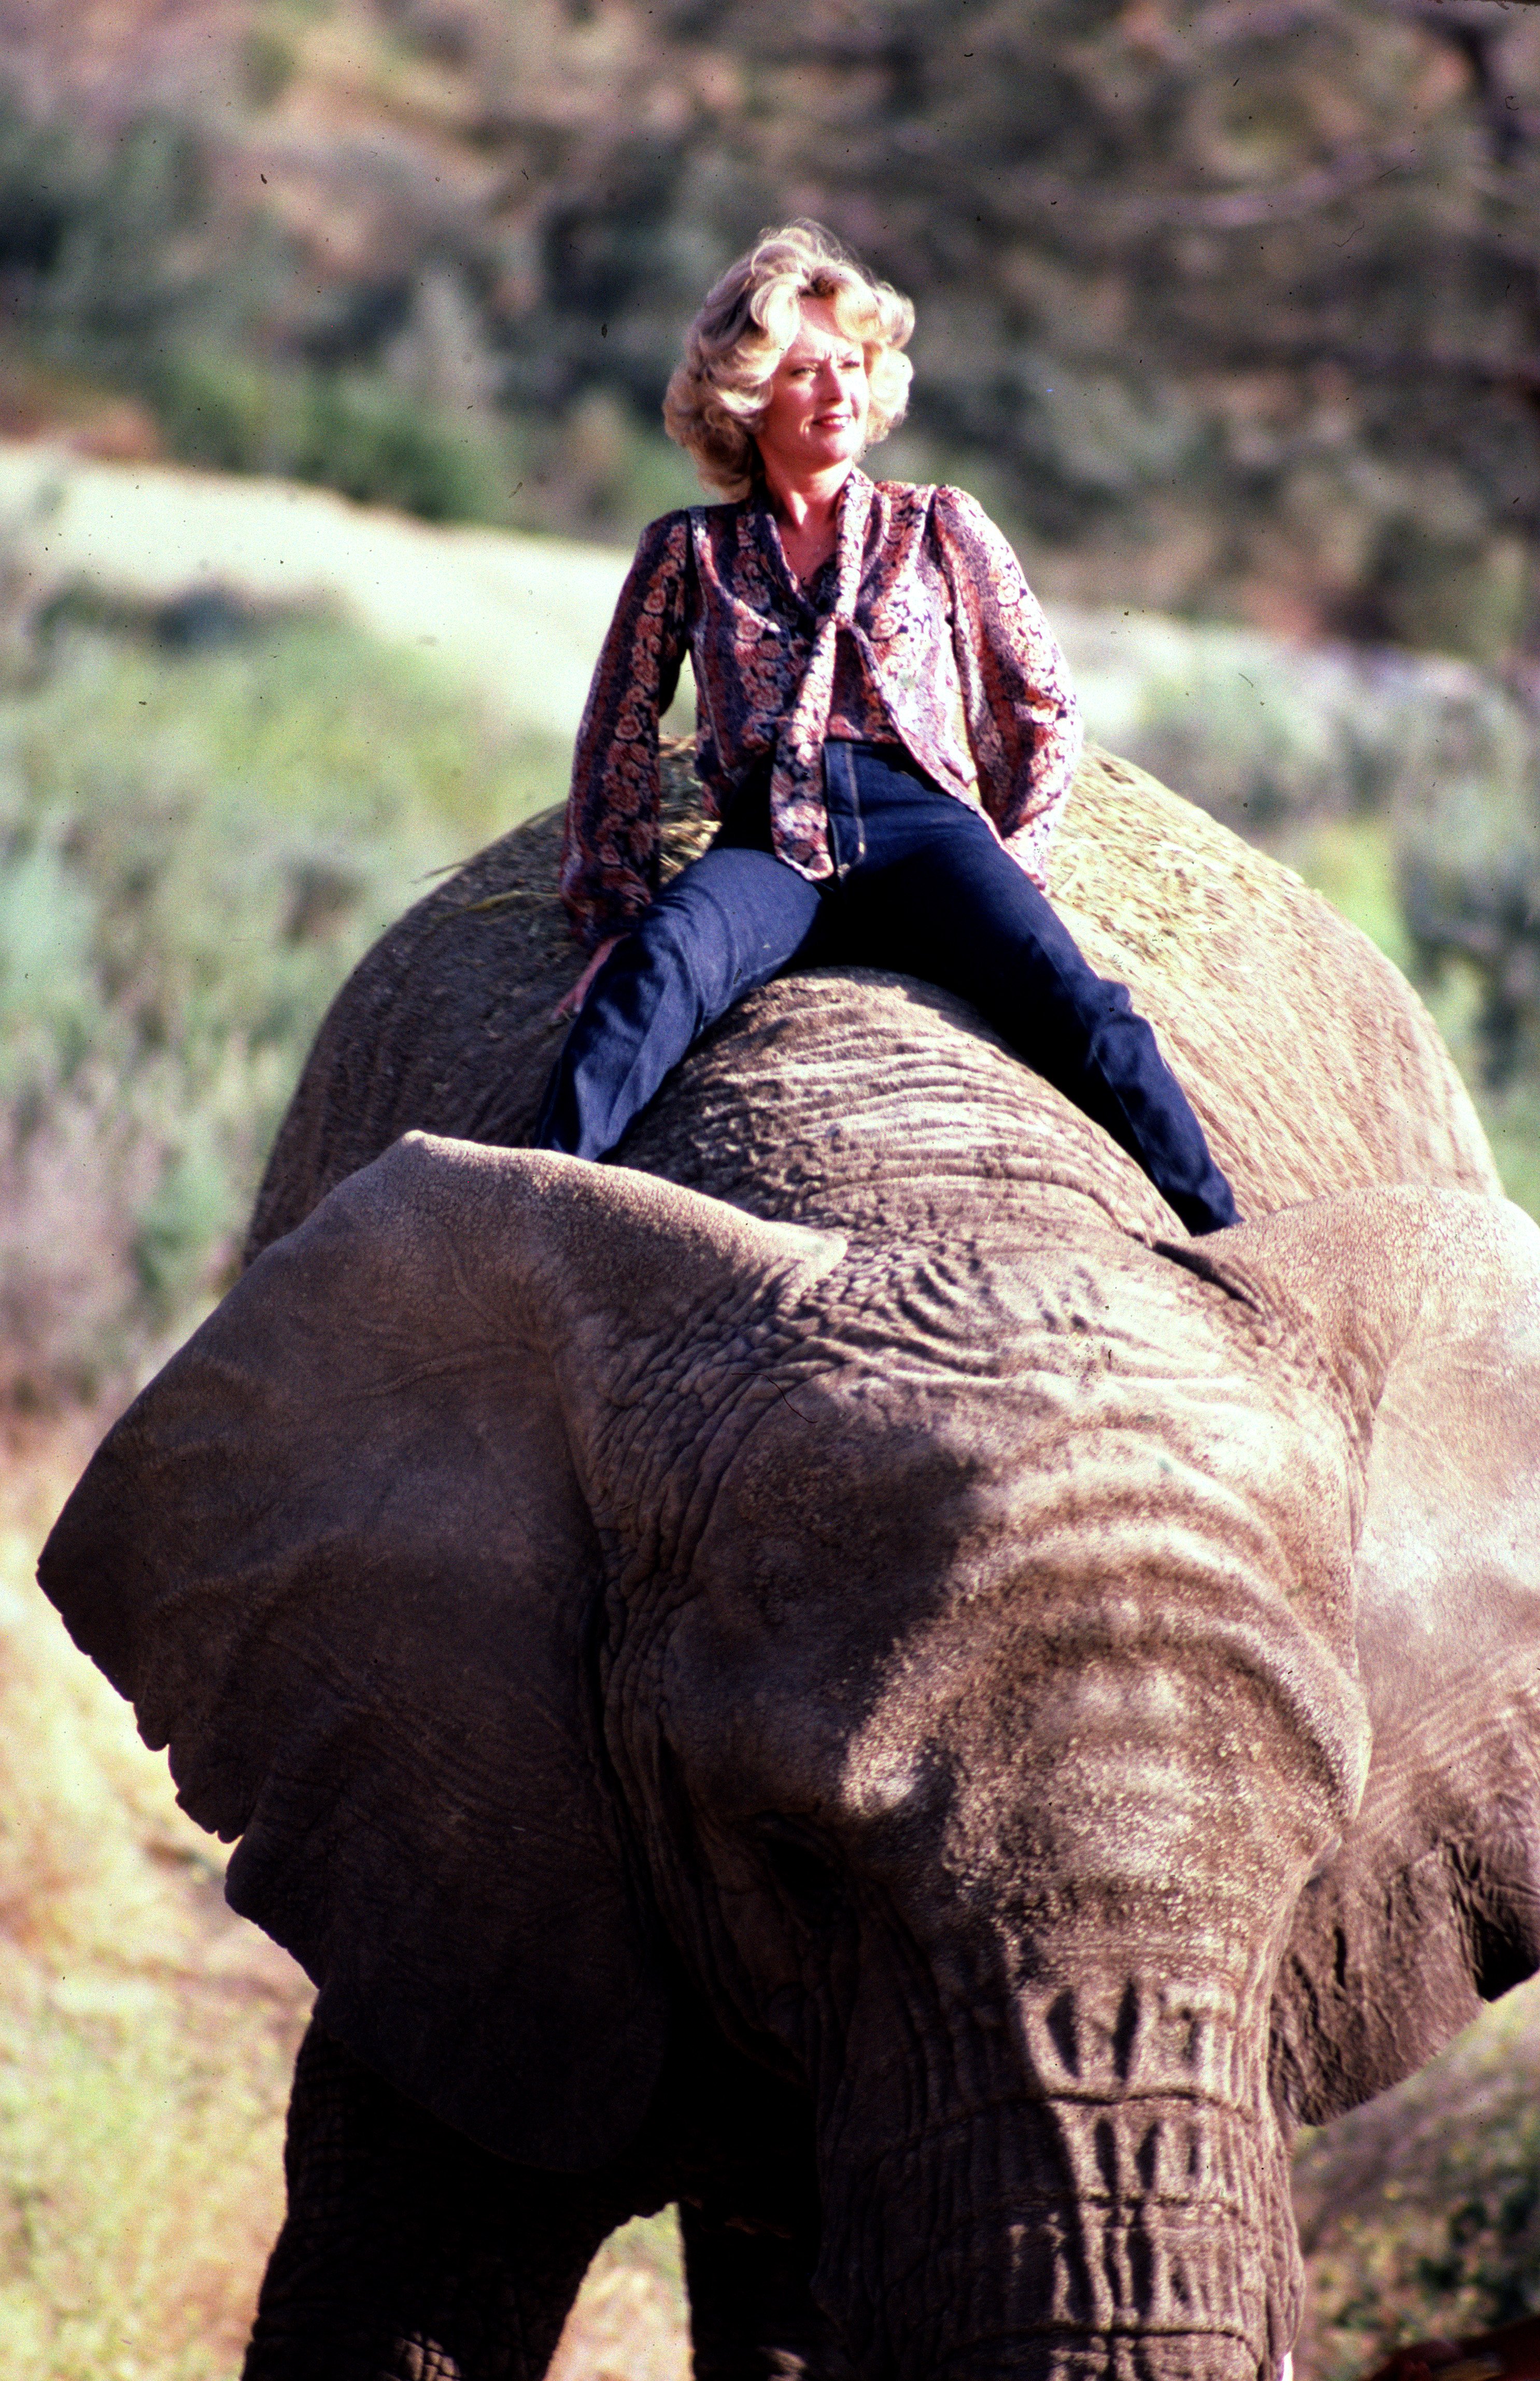 Actress Tippi Hedren sits astride an Elephant at her Saugus Animal reserve November 17, 1983